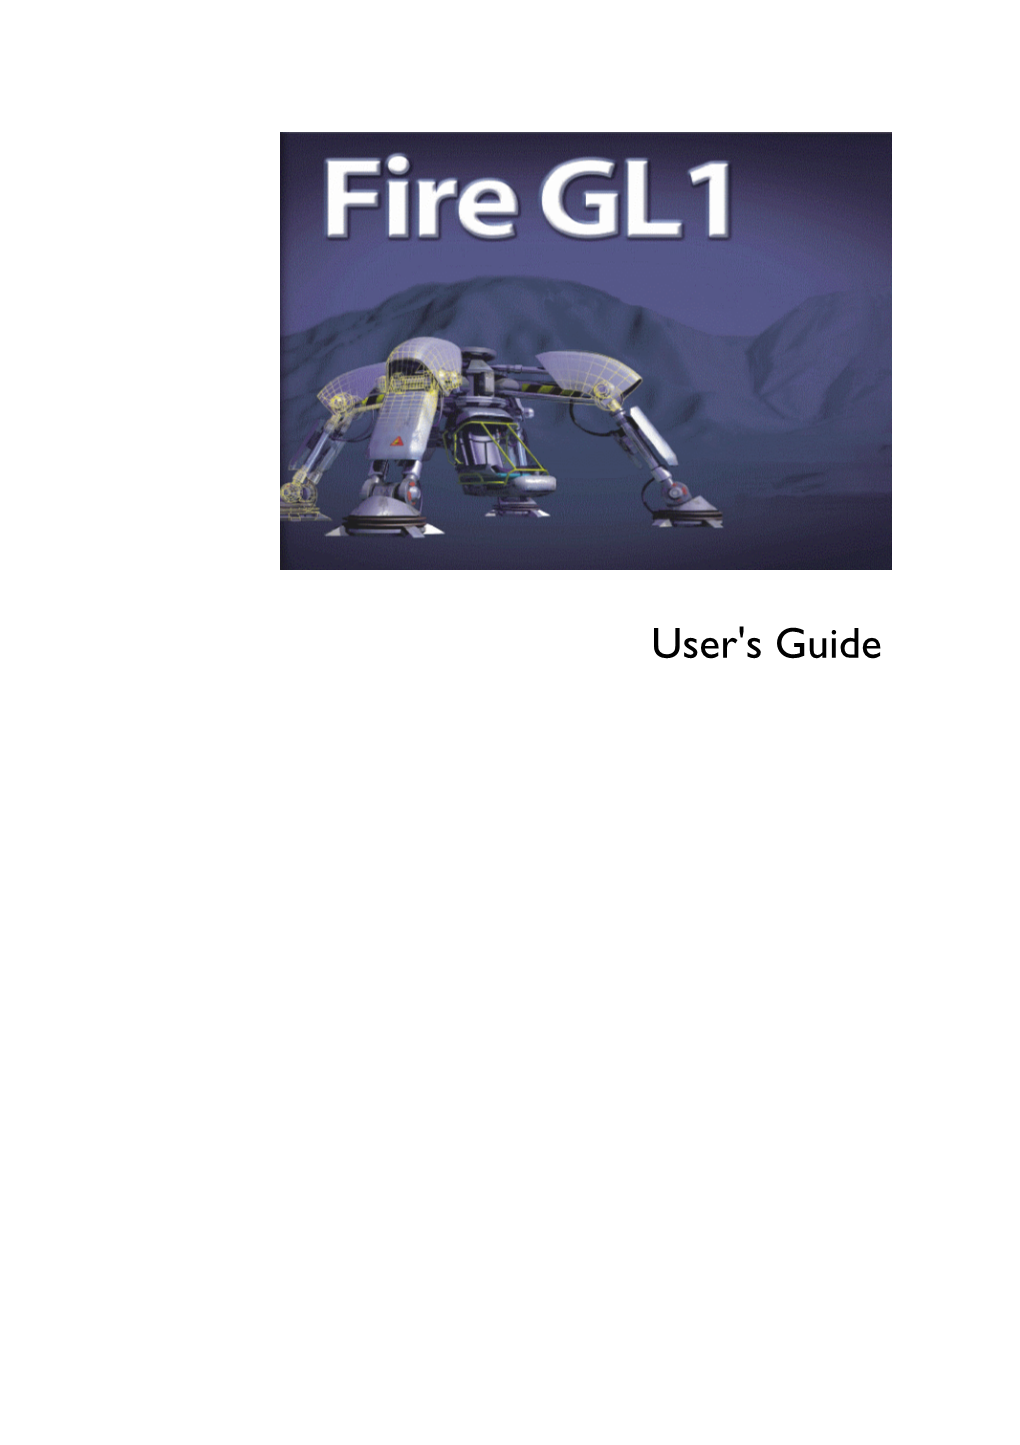 Fire GL1 User's Guide